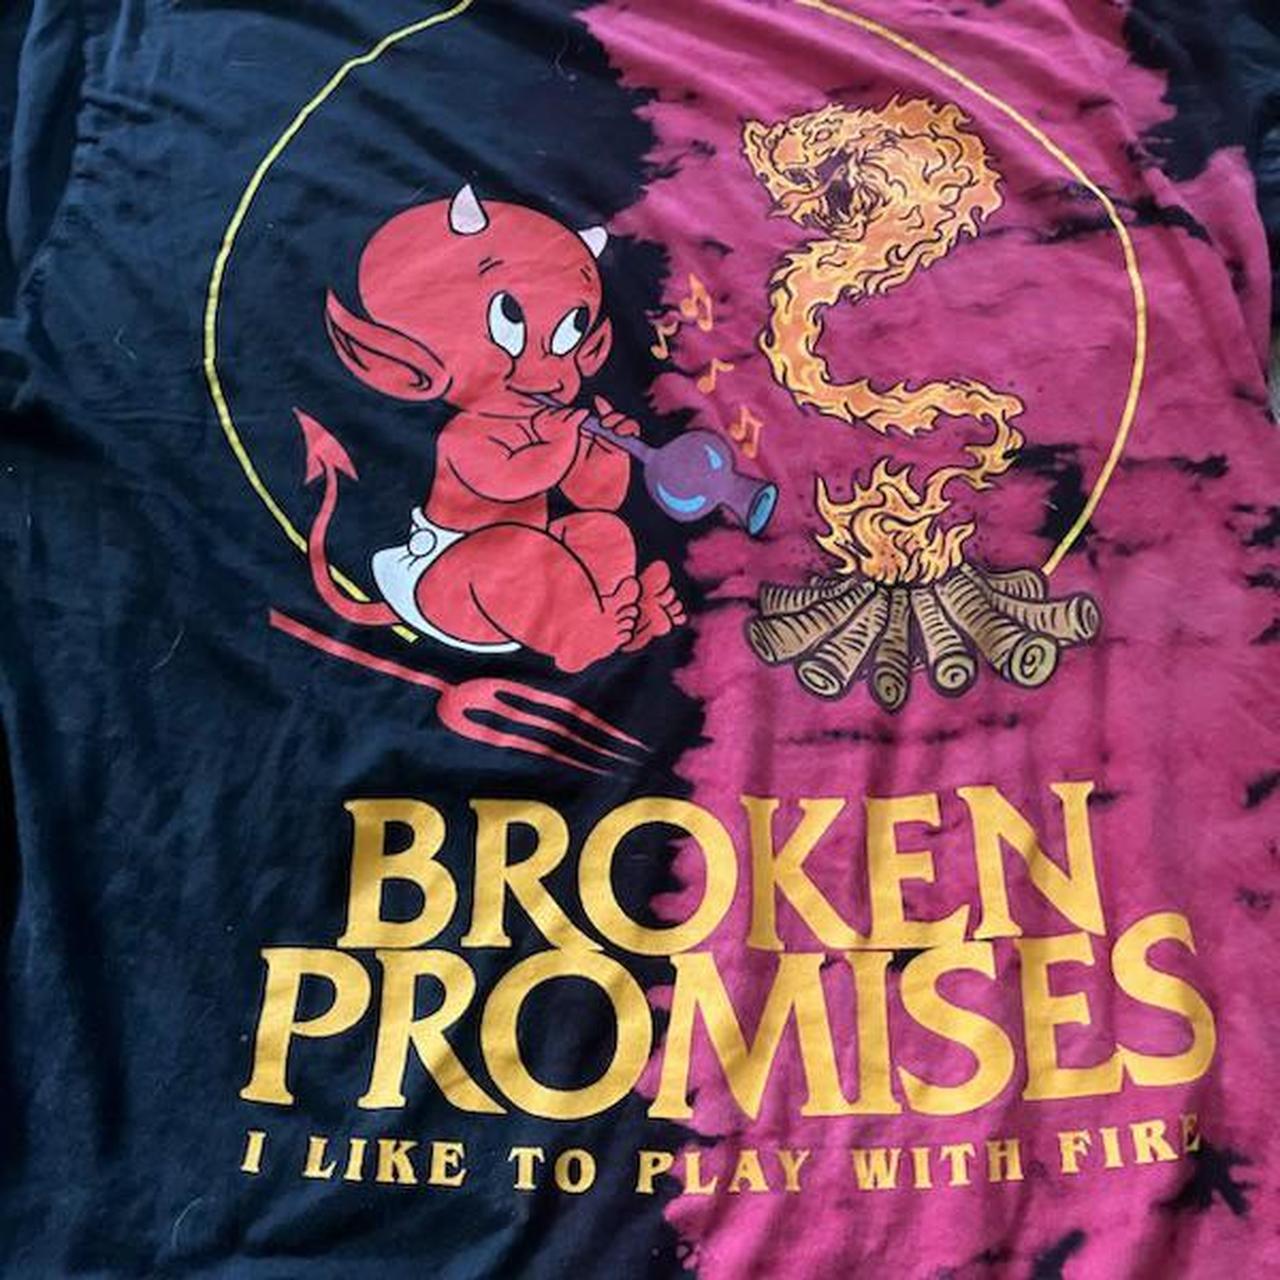 Broken Promises x Hot Stuff Graphic Men Sweatpants Joggers